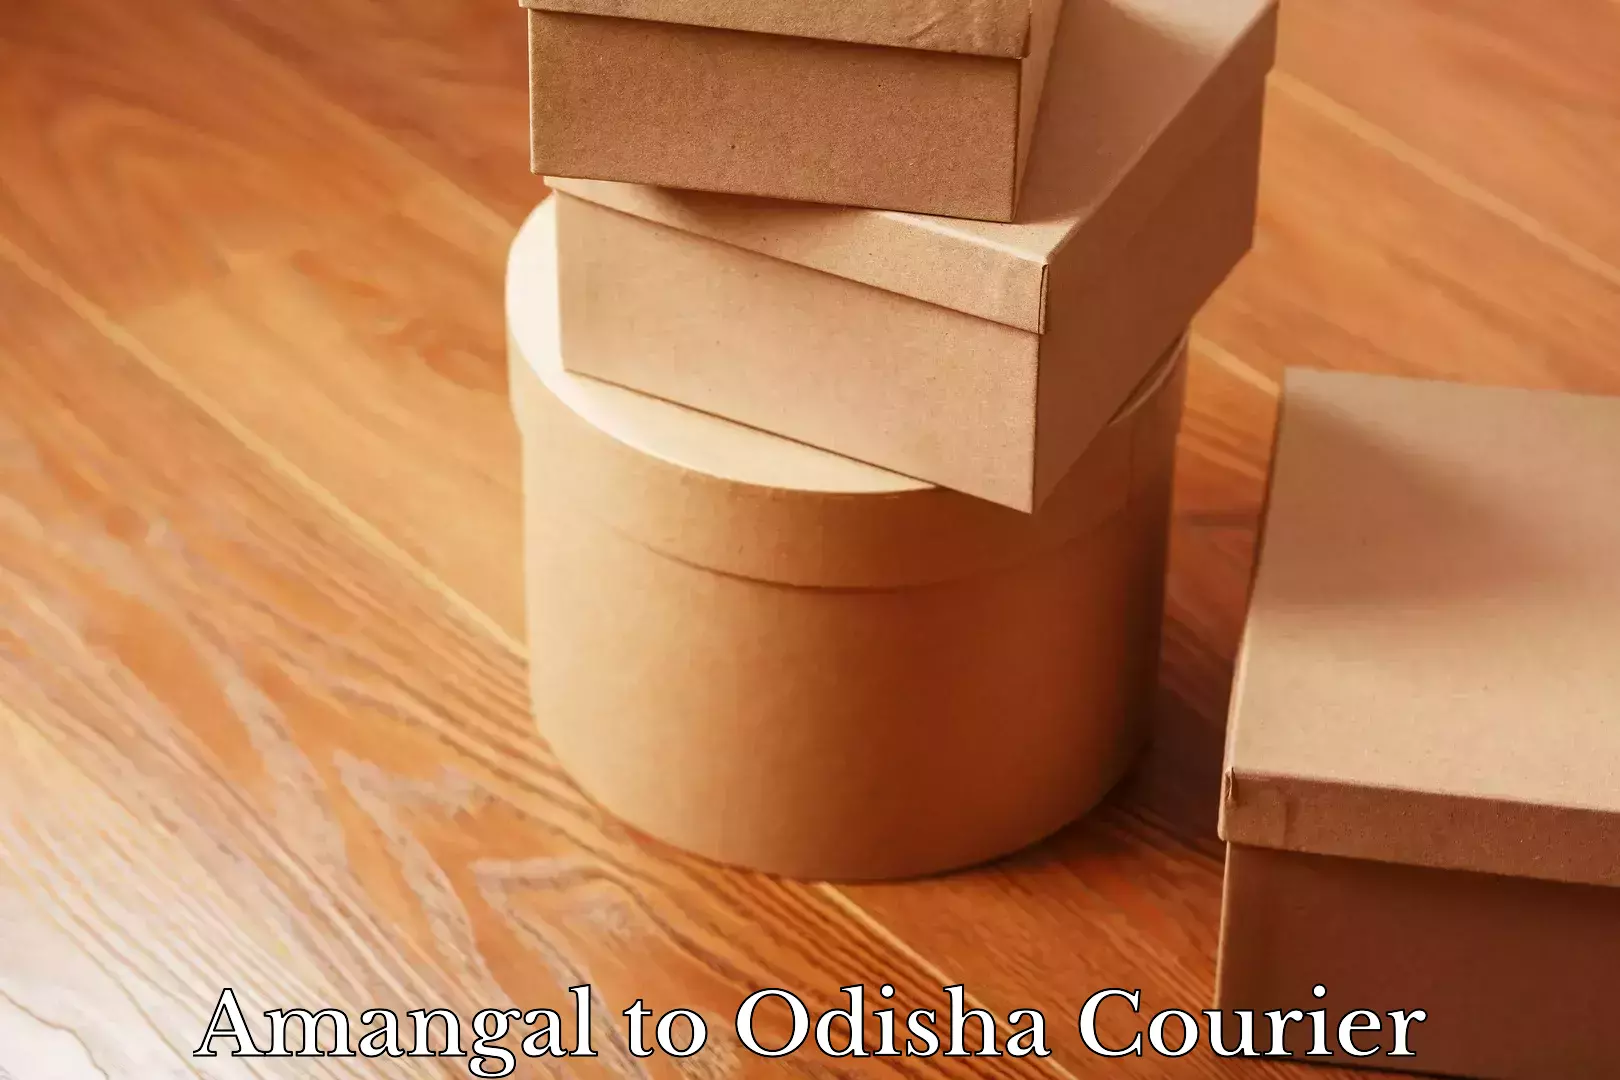 On-call courier service Amangal to Odisha